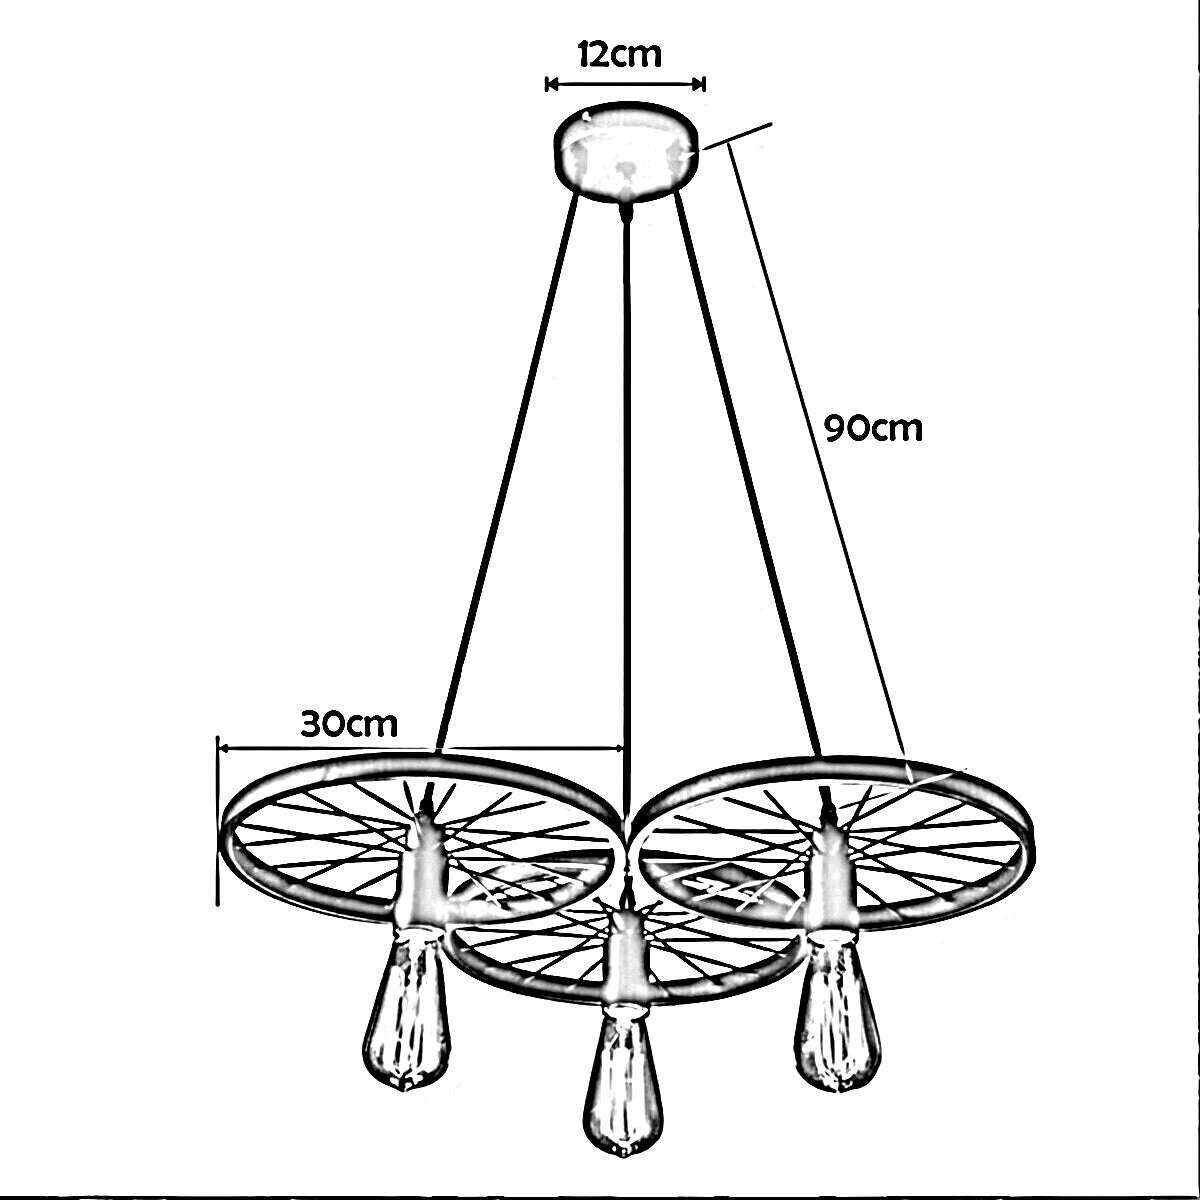 3-Head Wheel Shade Hanging Pendant Light in Black